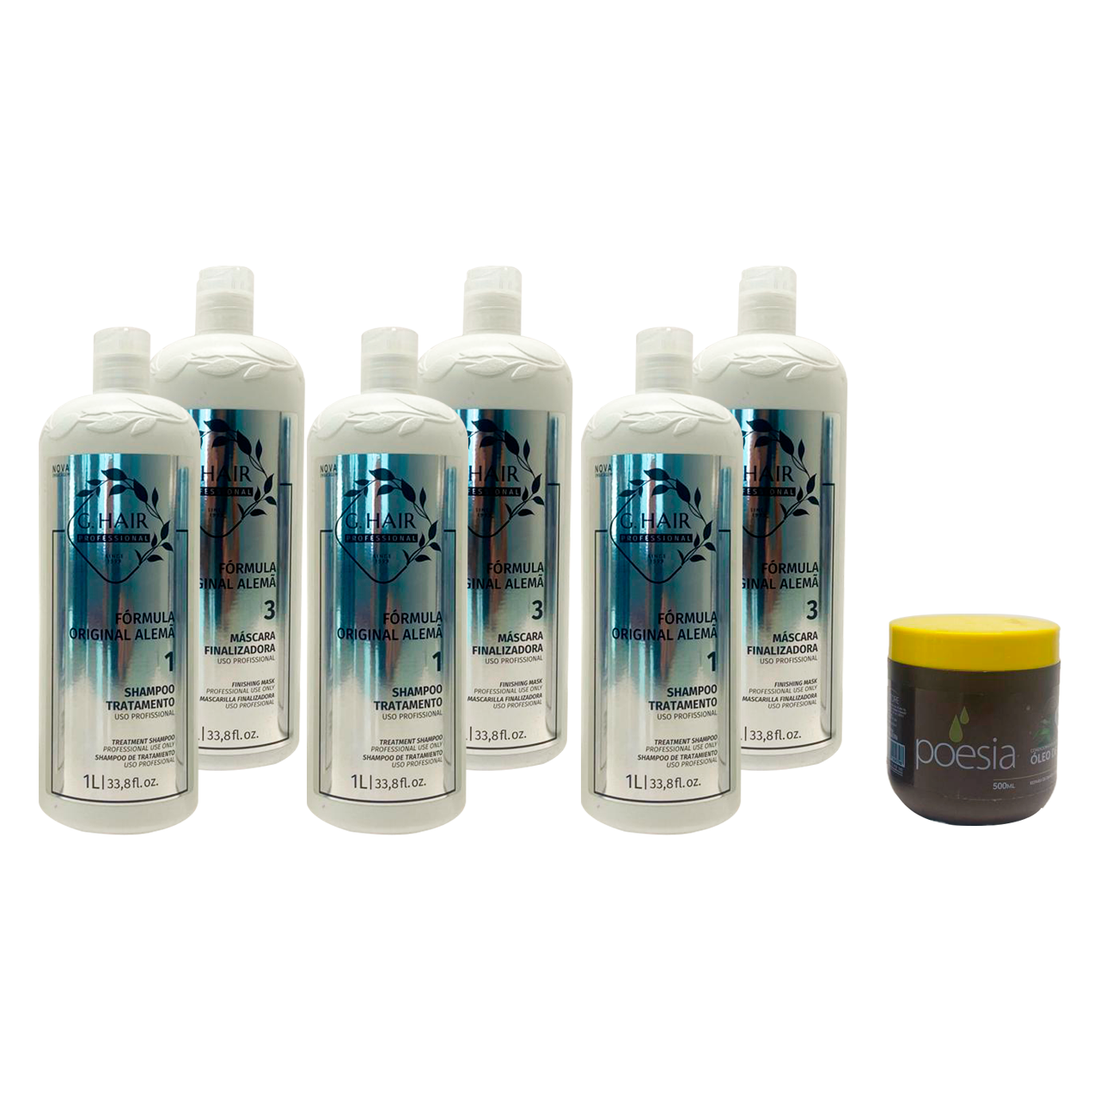 GHair, German Formula Kit Deep Cleansing Shampoo and Step 3, 3x1L + Poesia Oleo de Coco, Hair Mask, 500g